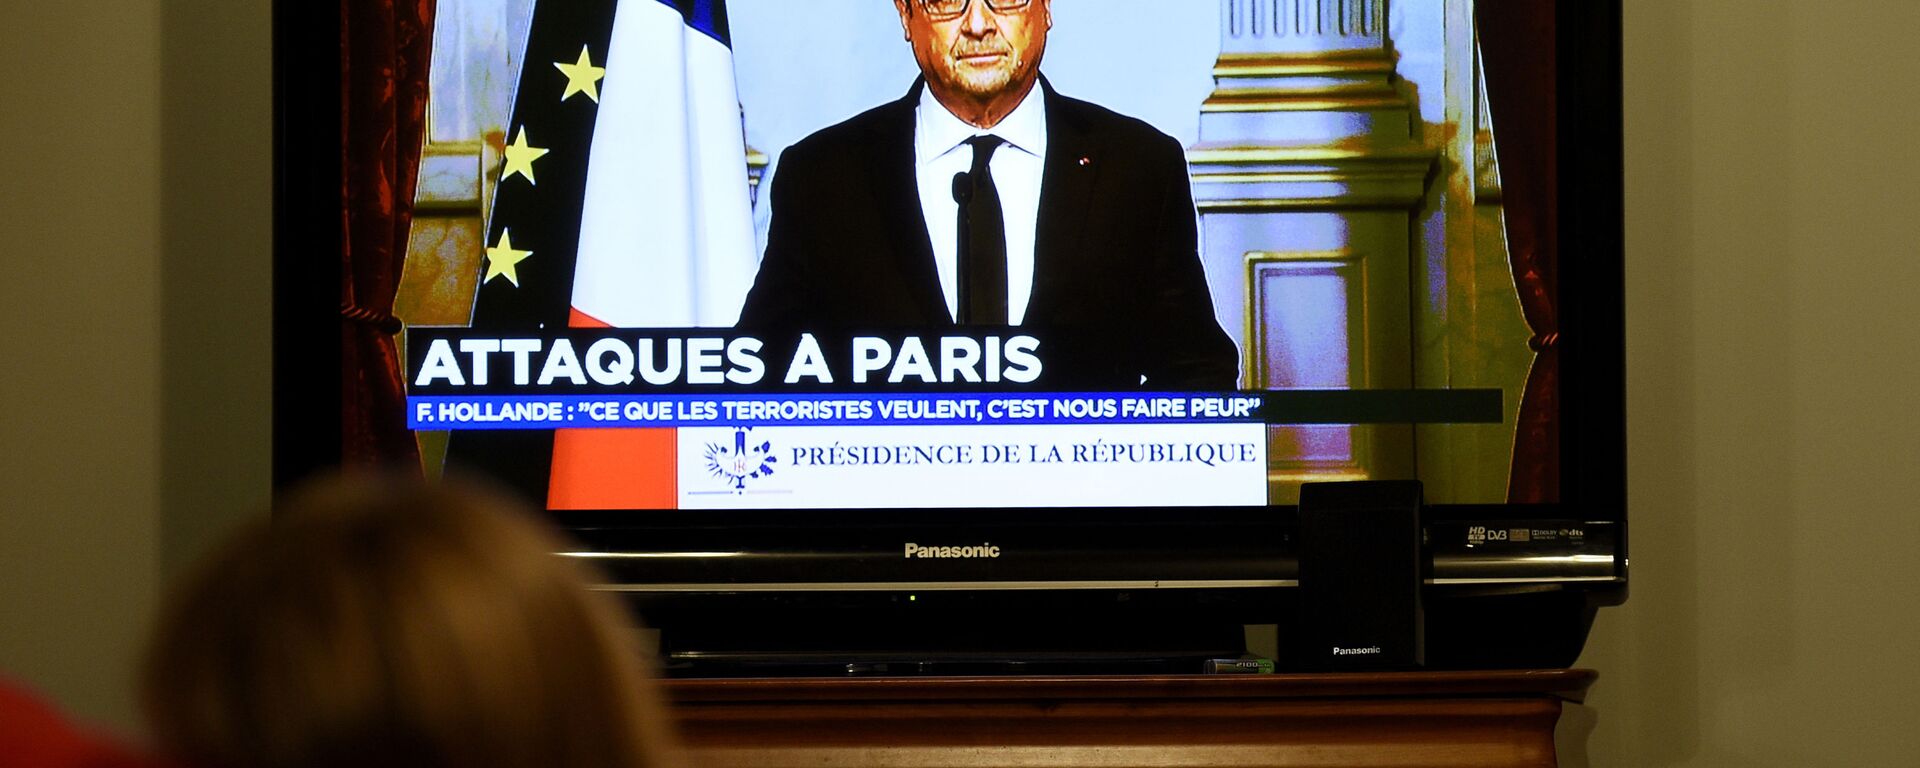 Обращение президента Франции Франсуа Олланда к нации, после серии терактов в Париже - Sputnik Узбекистан, 1920, 08.09.2021